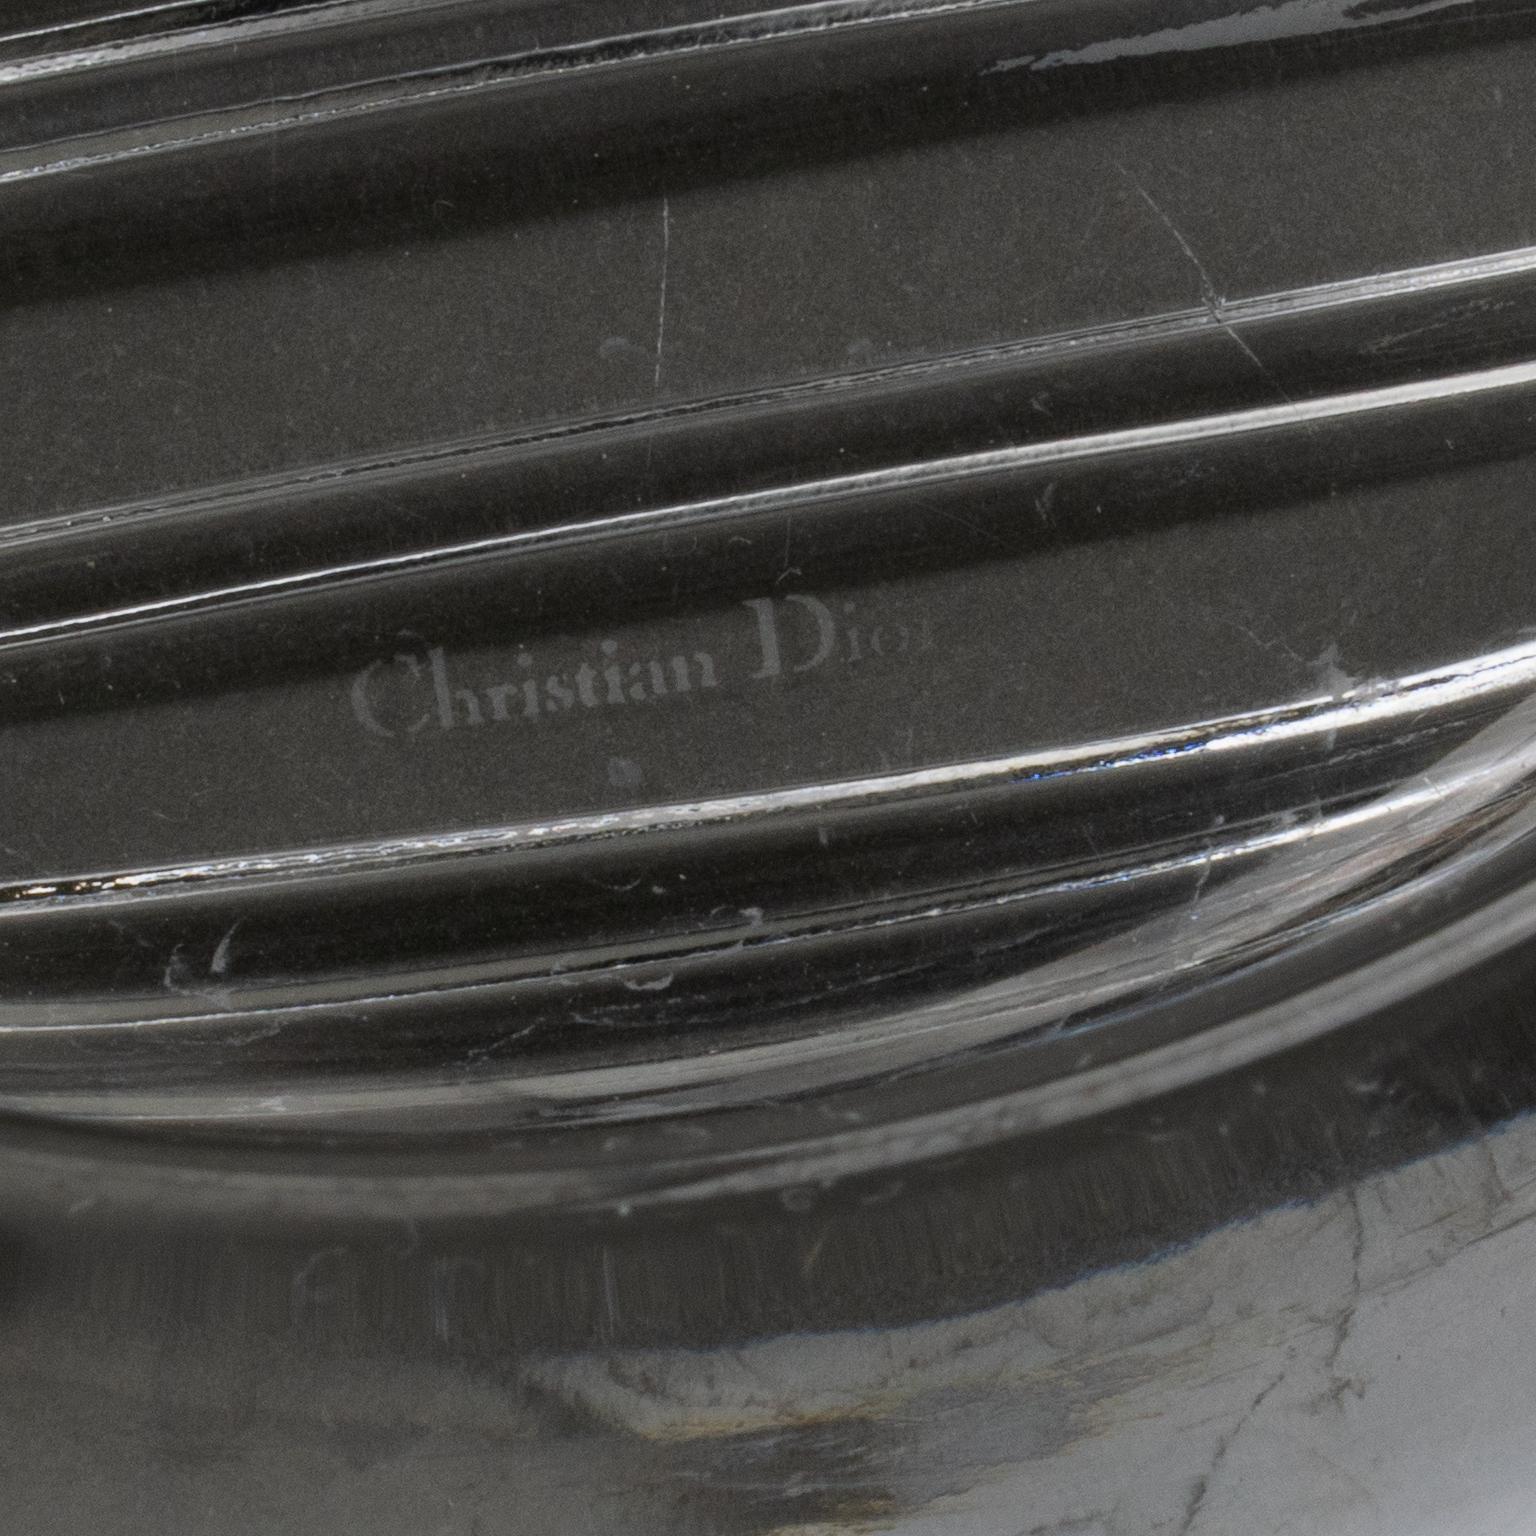 Christian Dior Crystal Cigar Ashtray Bowl Dish Catchall Vide Poche For Sale 3